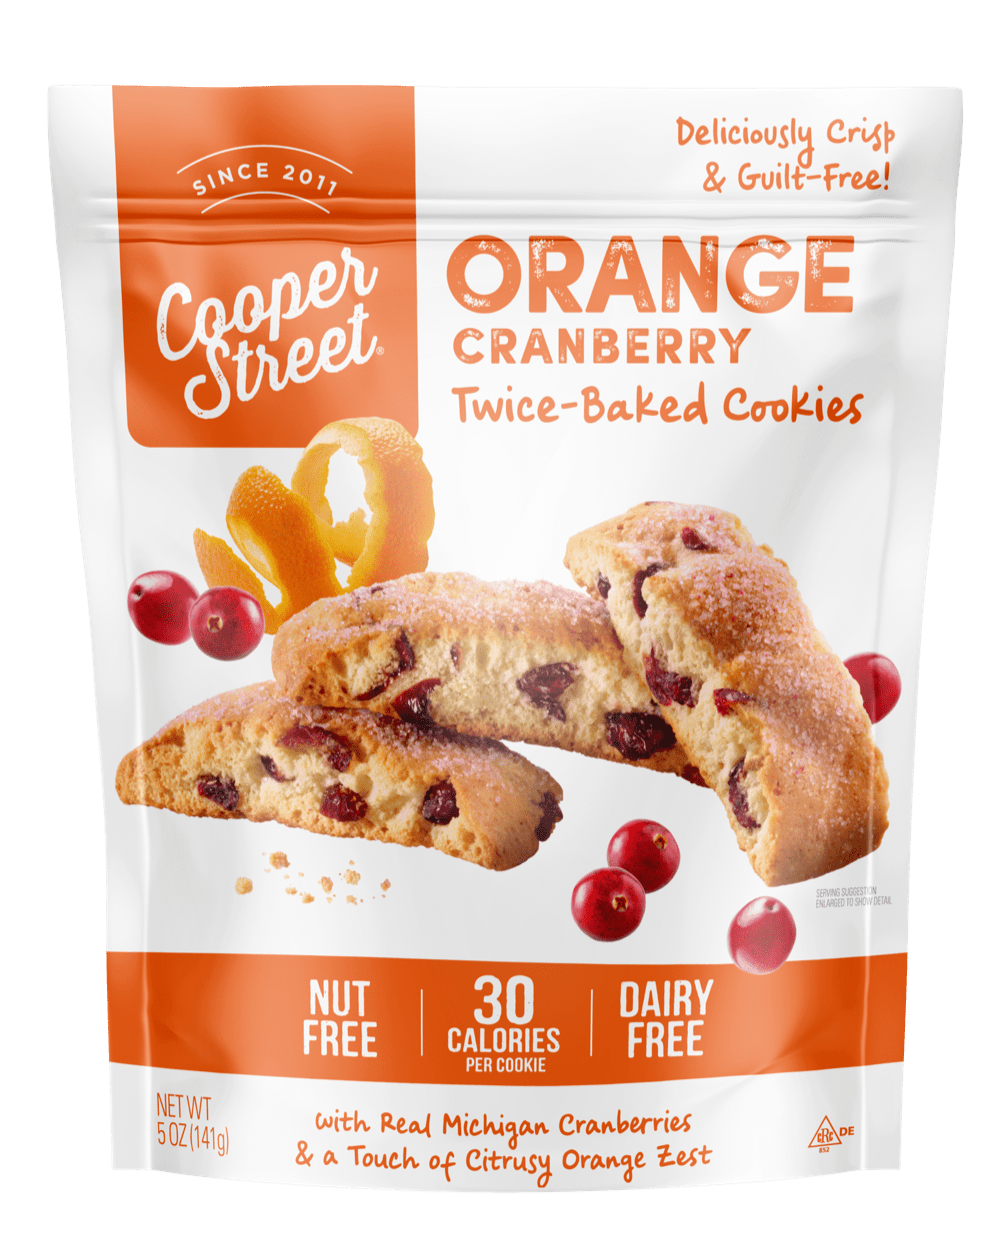 Orange cranberry cookies